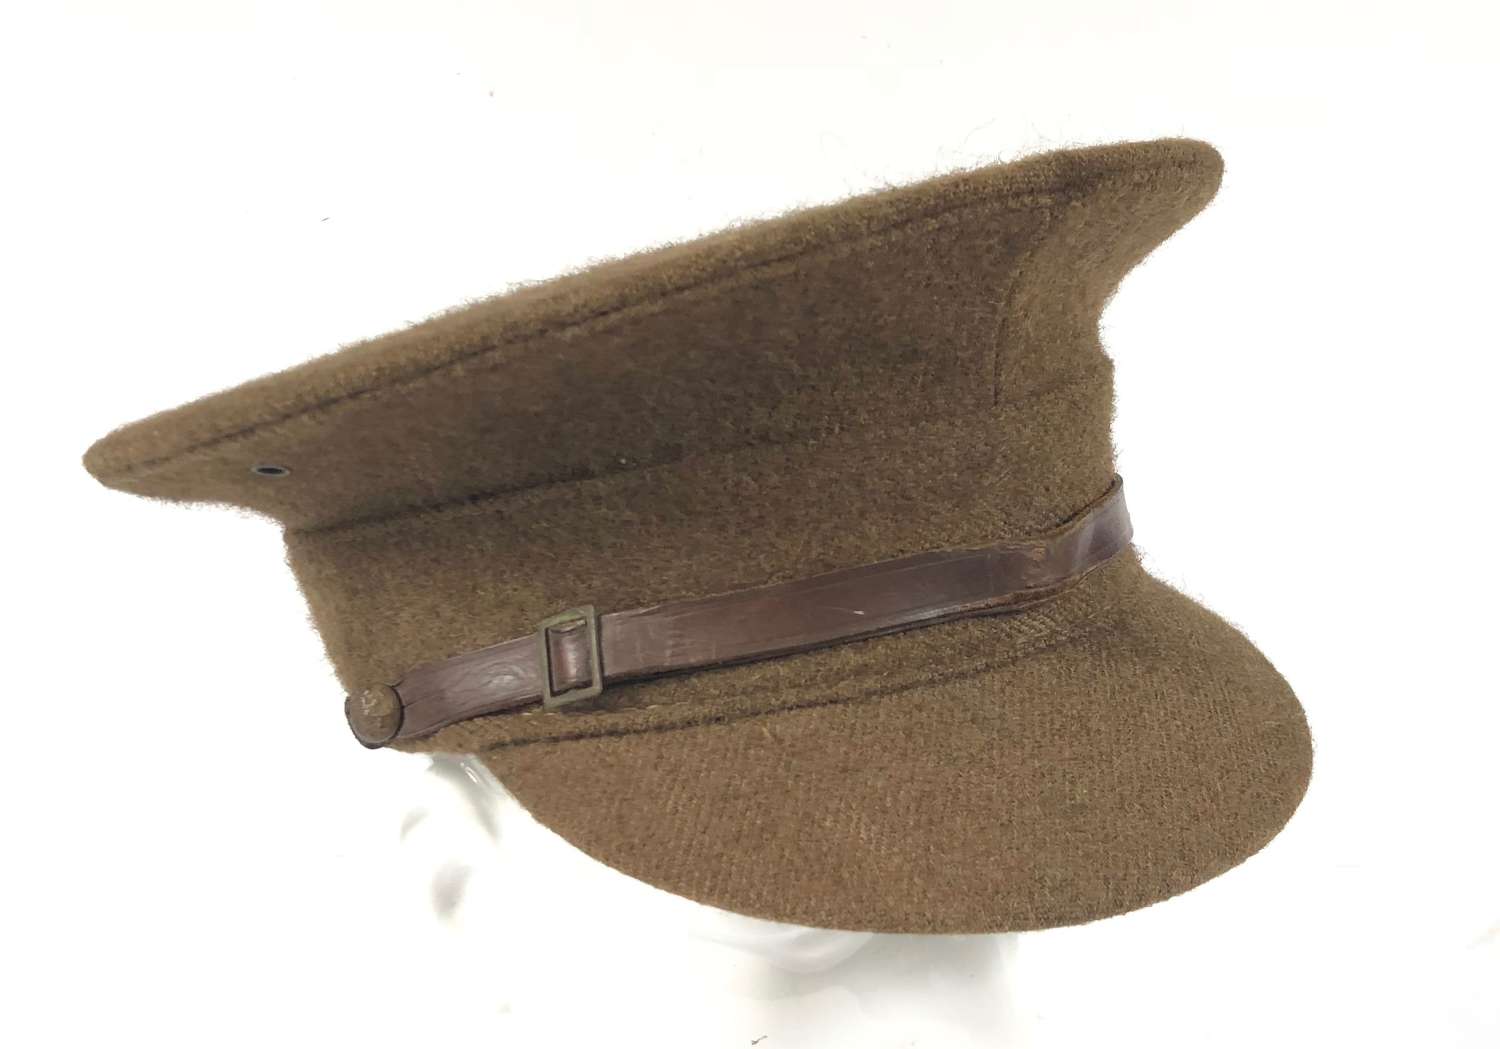 British Army Interwar Issue of the 1922 Pattern Service Cap.